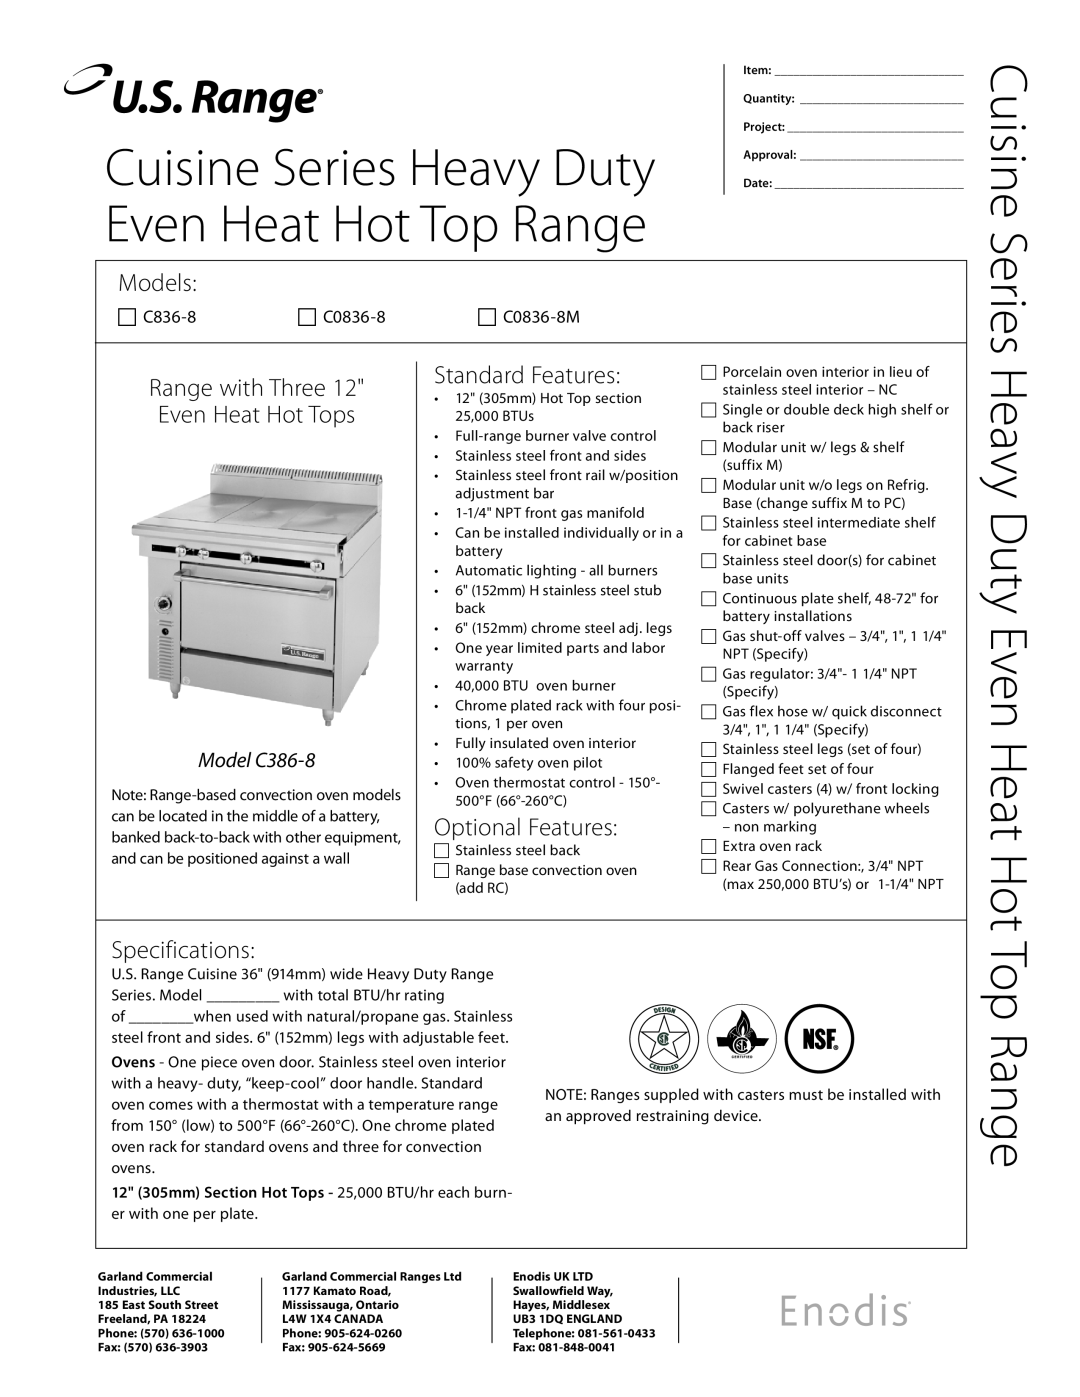 Garland C0836-8 specifications Cuisine, Top Range, Series Heavy Duty Even Heat Hot, Models, Standard Features,  C836-8 